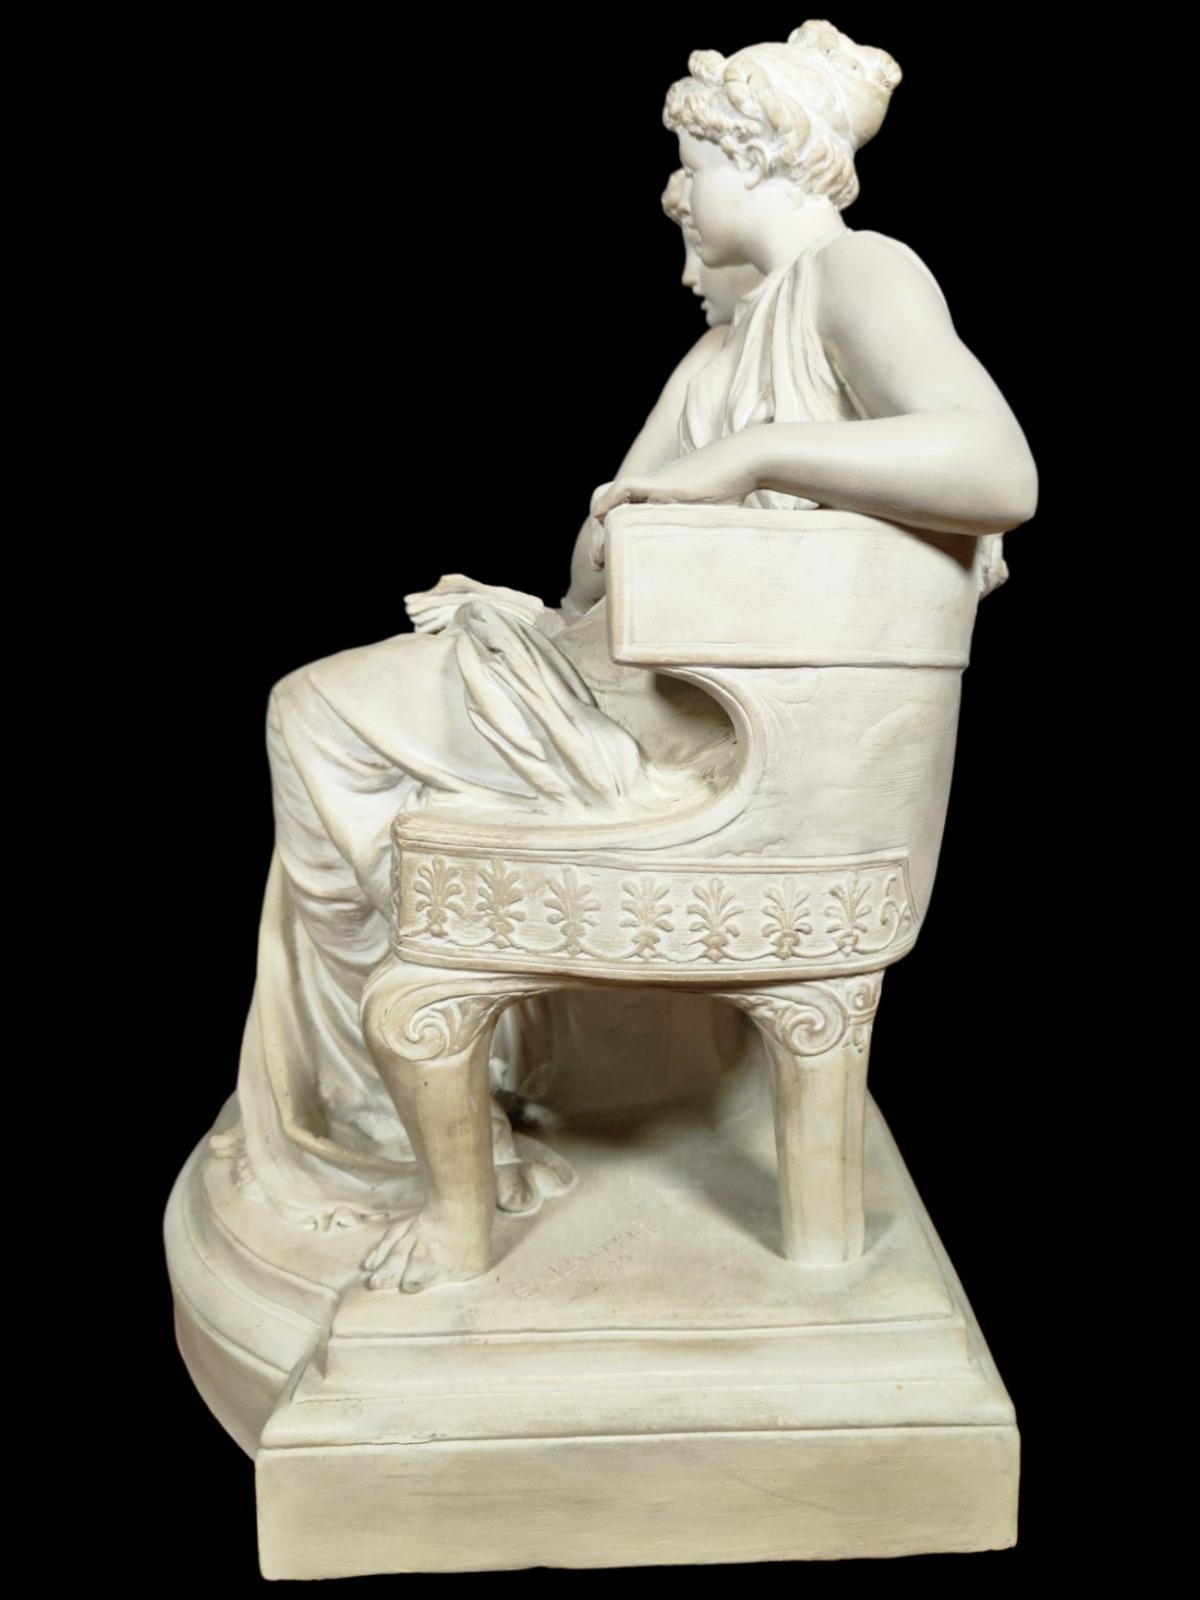 19th Century Terracotta of Greek Ladies ED LANTERI sculpture.

XIX th Century terracotta sculpture depicting ladies on a Neoclassical klismos chair, entitled 